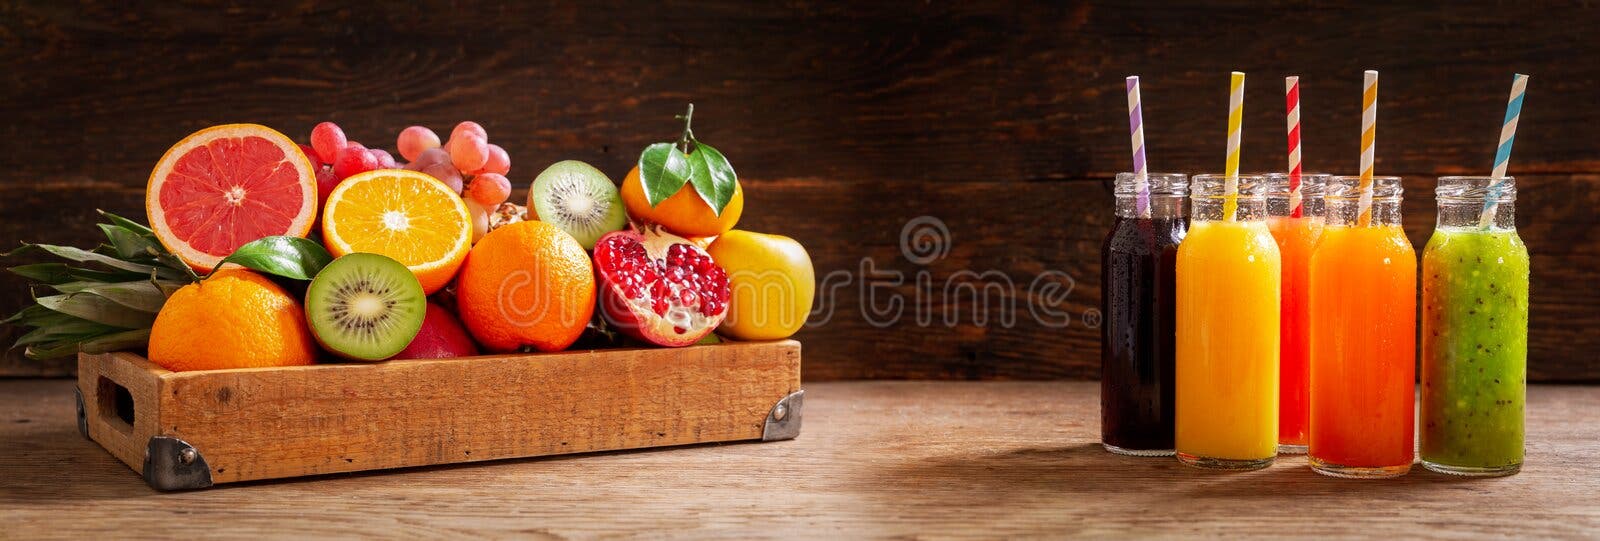 https://thumbs.dreamstime.com/b/bottles-fruit-juice-fresh-fruits-wooden-table-209212056.jpg?w=1600